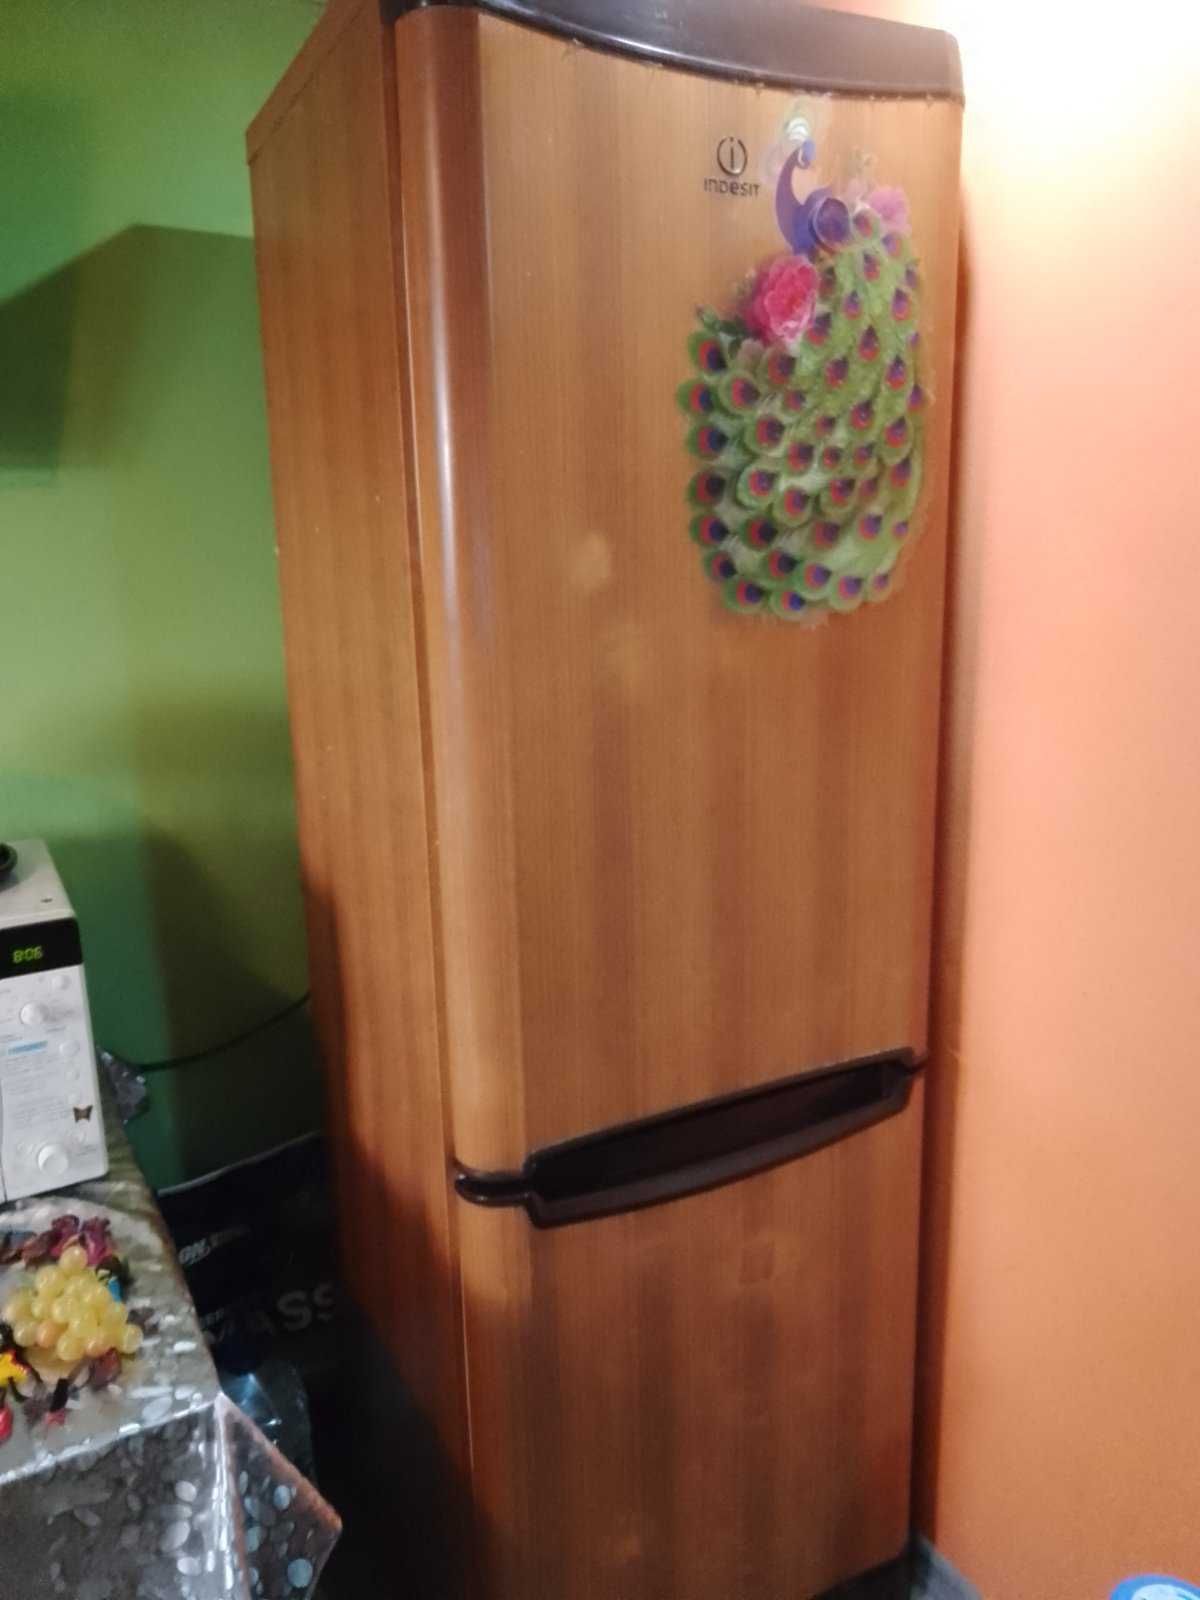 Холодильник "Indesit"